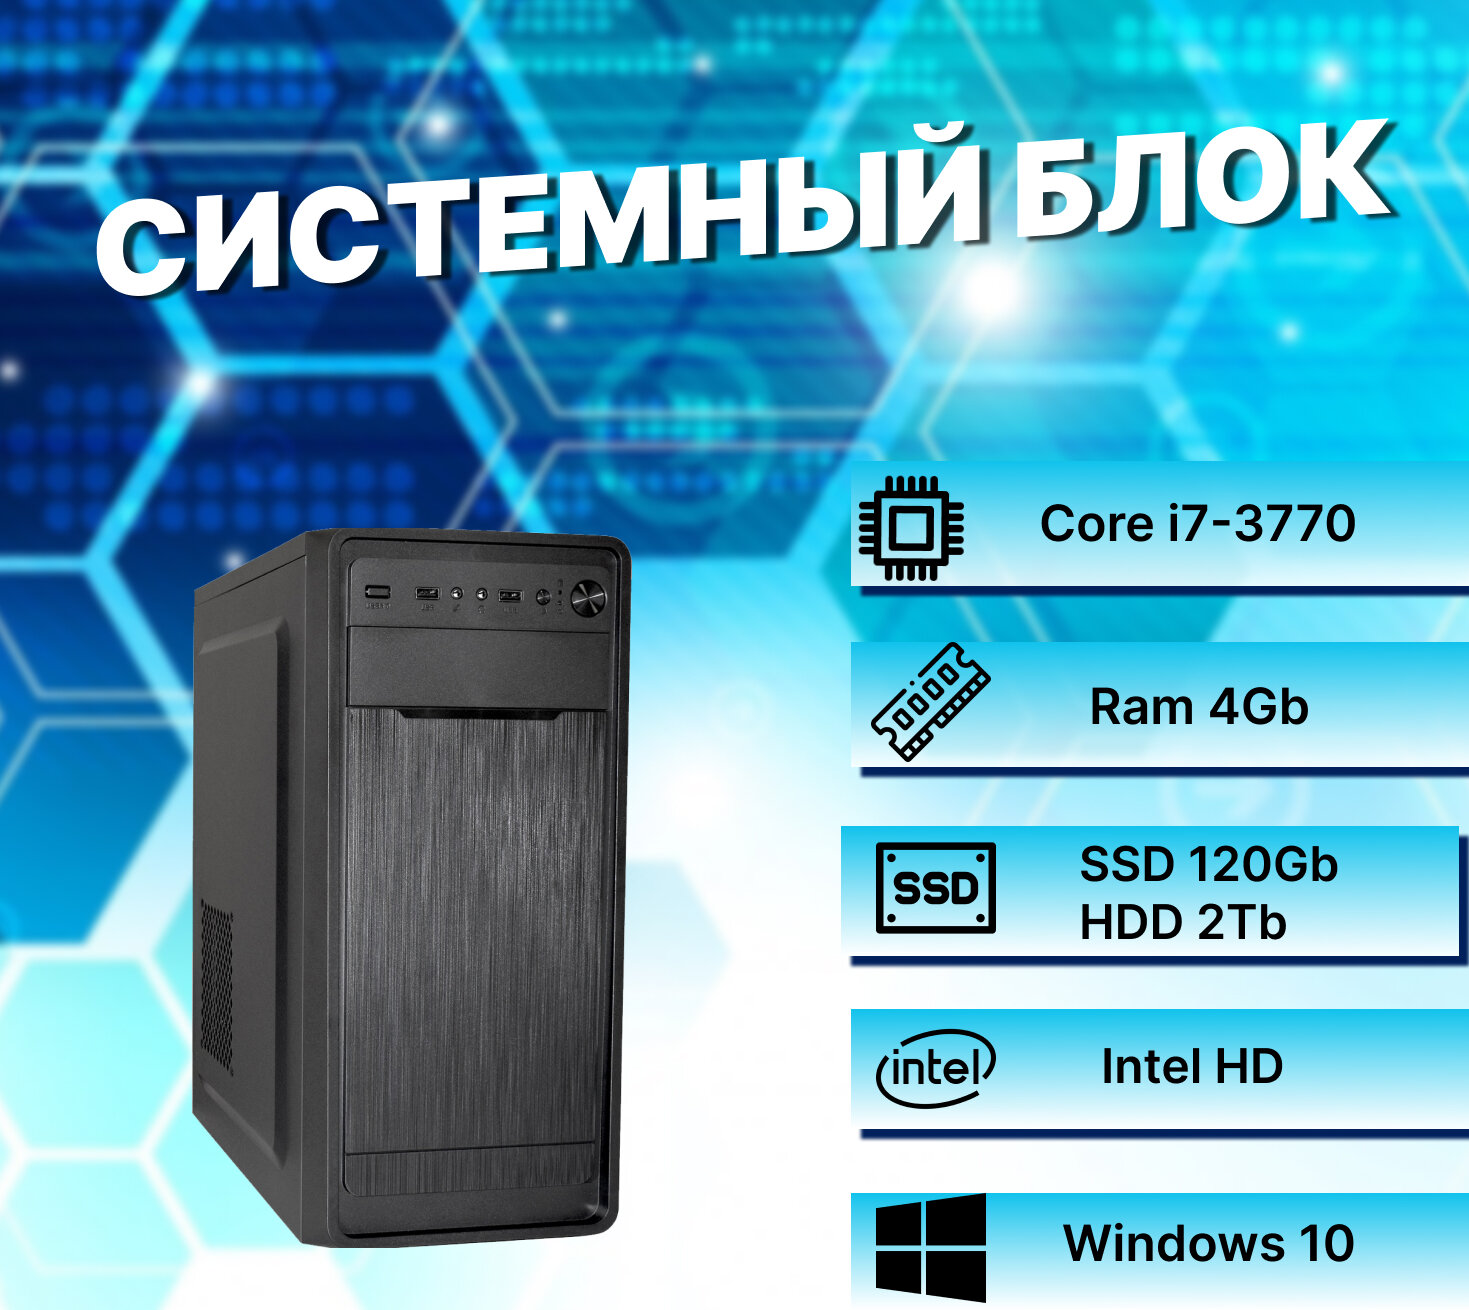 Системный блок Intel Core I7-3770 (3.4ГГц)/ RAM 4Gb/ SSD 120Gb/ HDD 2Tb/ Intel HD/ Windows 10 Pro